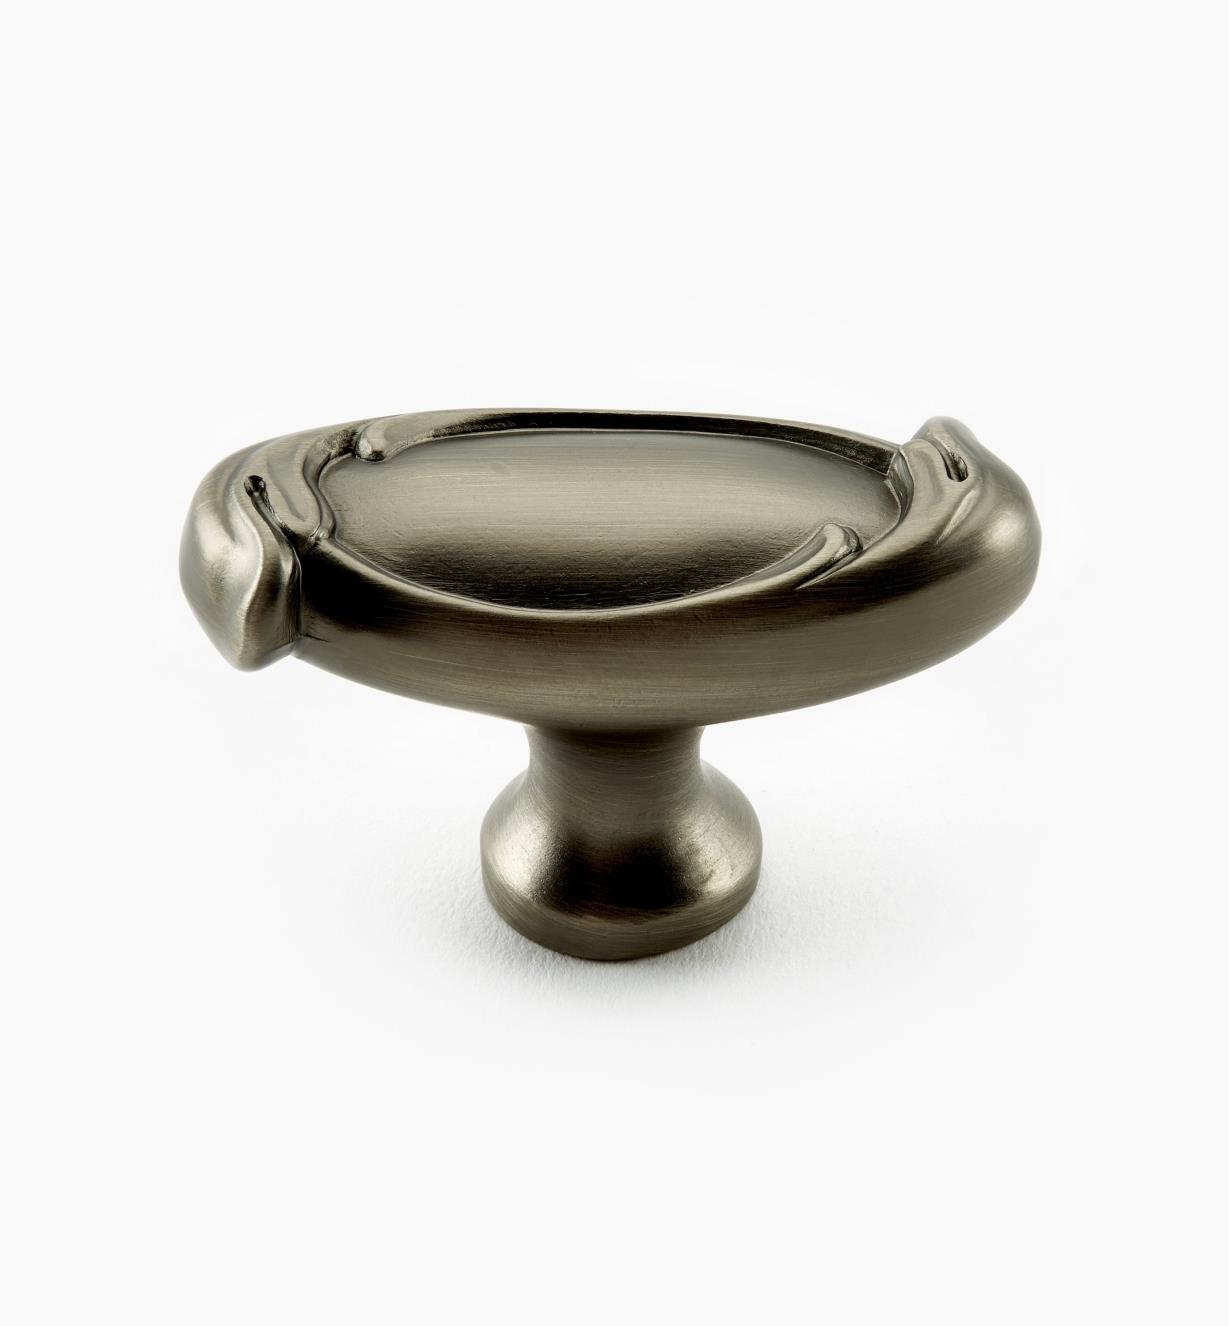 02A5261 - 2" x 15/16" Antique Nickel Oval Knob